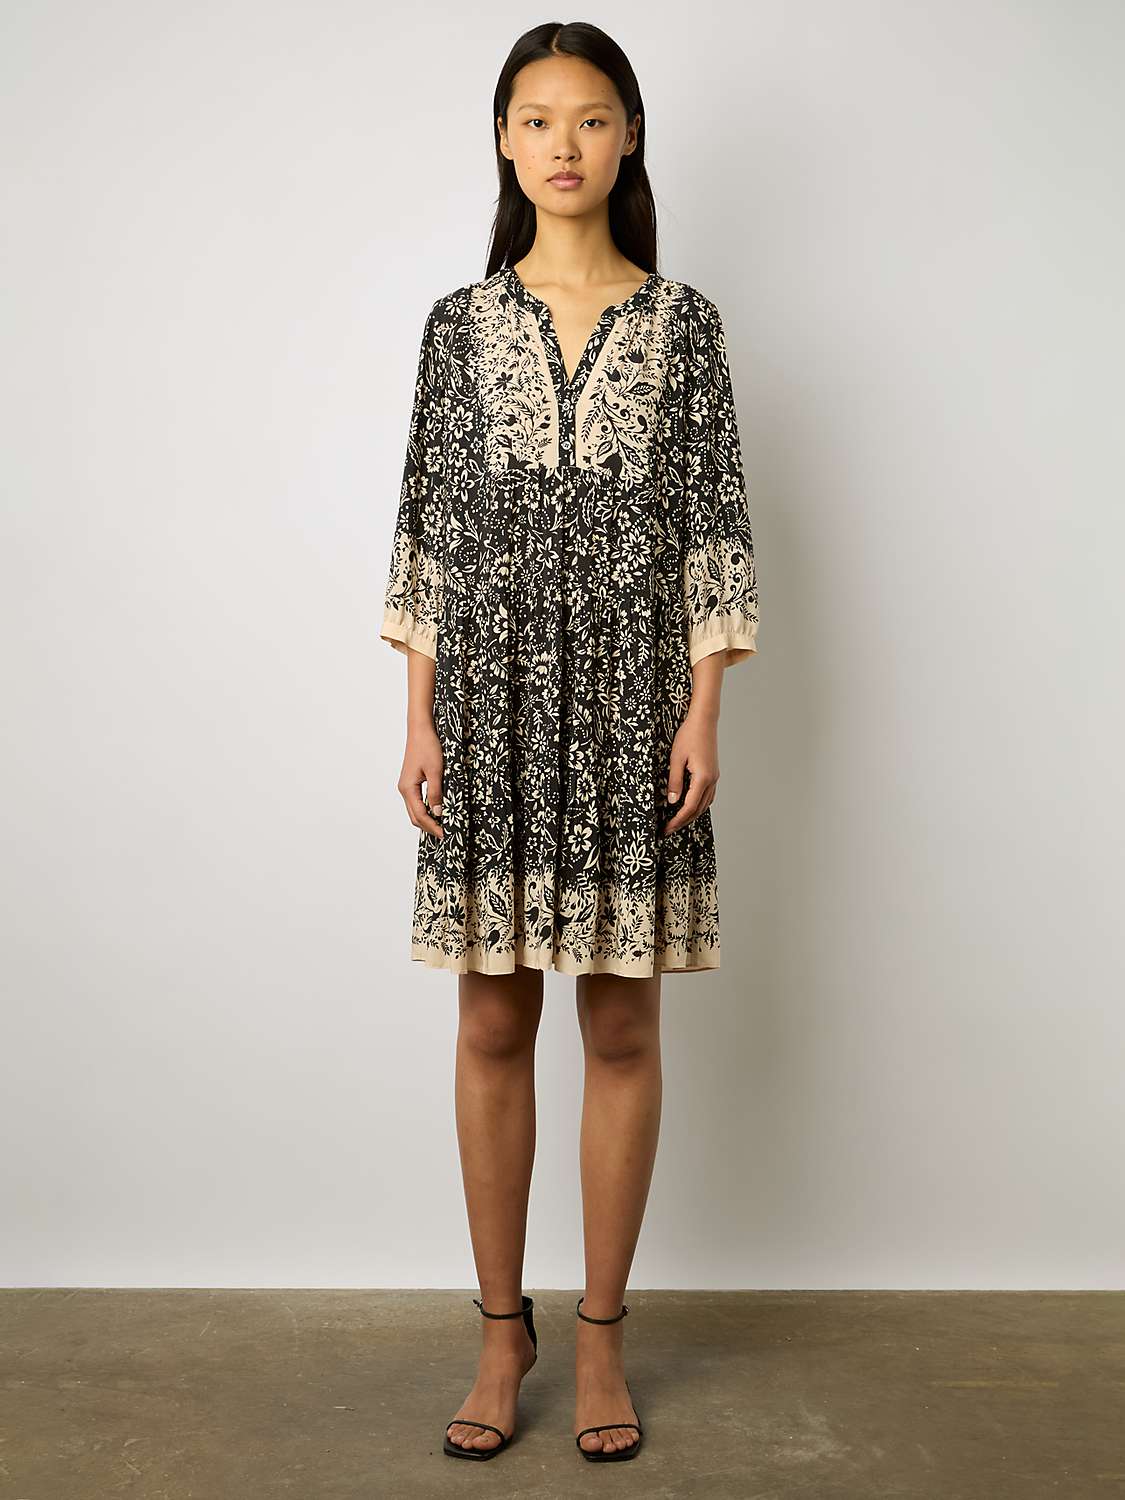 Buy Gerard Darel Eliette Floral Print Dress, Black/Beige Online at johnlewis.com